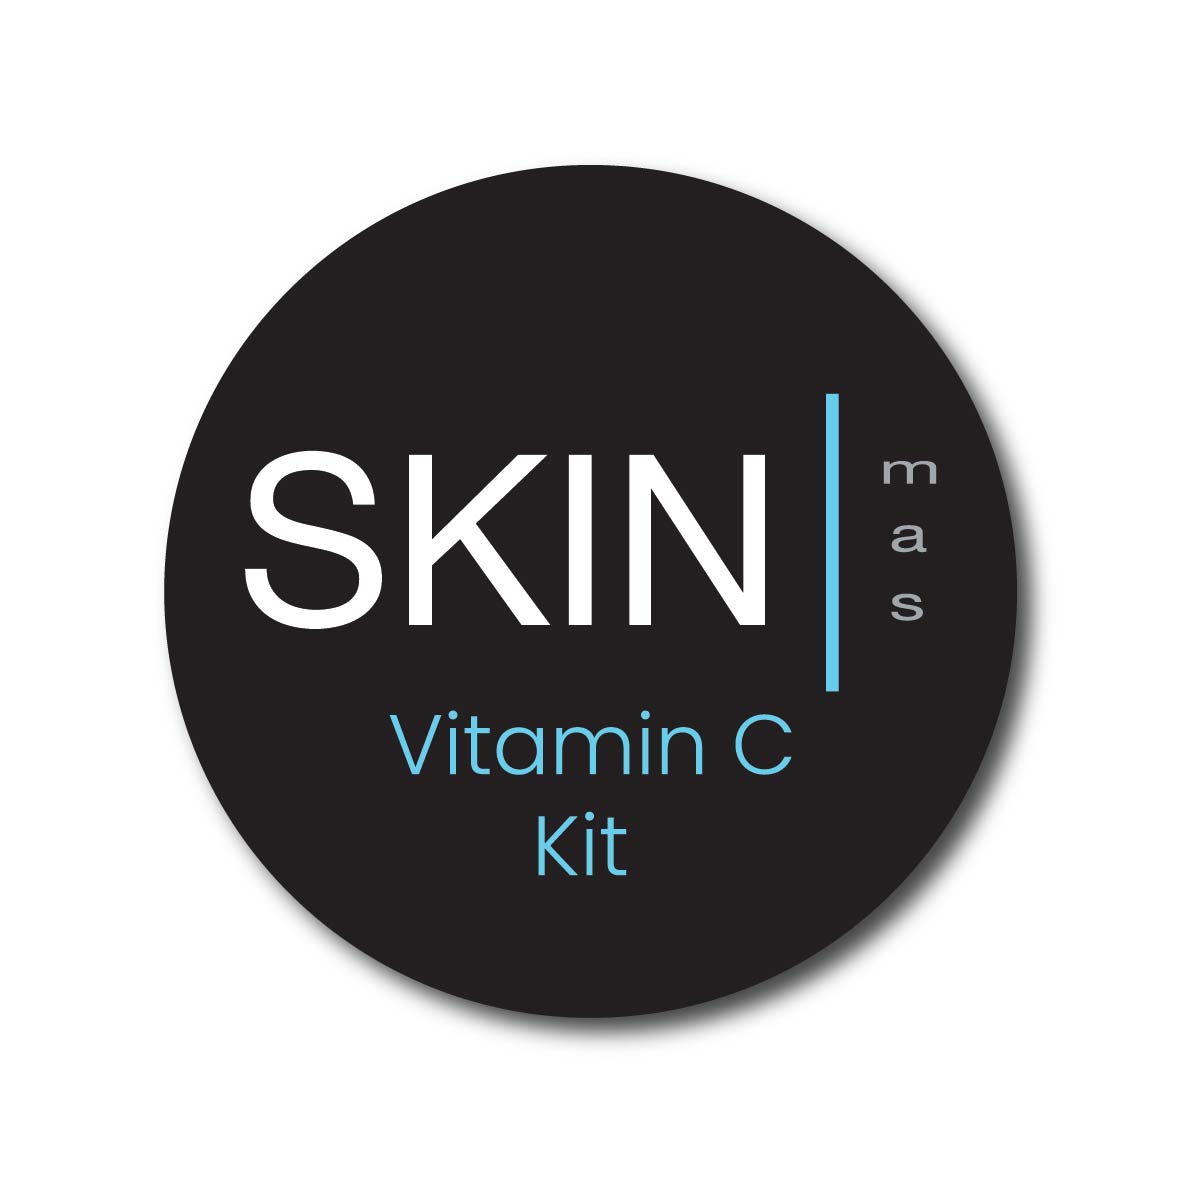 SM Black Circle Vitamin C Kit Sticker